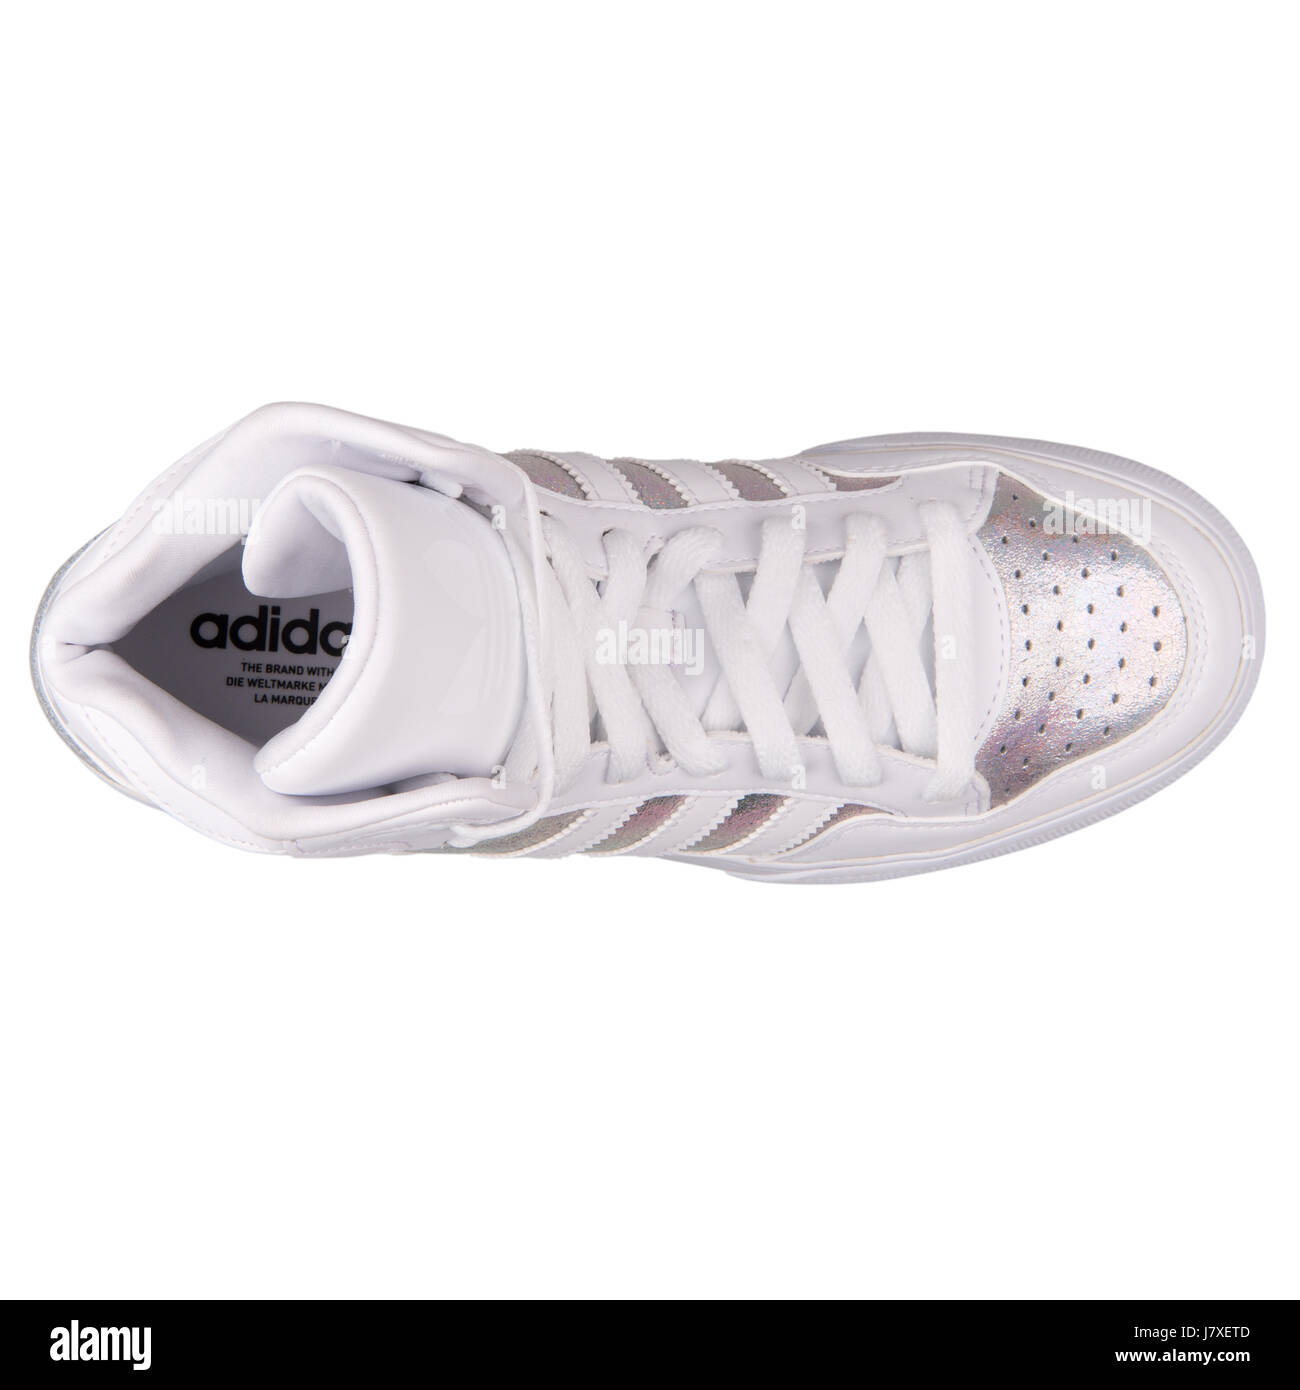 Extaball Adidas W blanc irisé de femmes avec l'argent métallique cuir  Sneakers - S77398 Photo Stock - Alamy